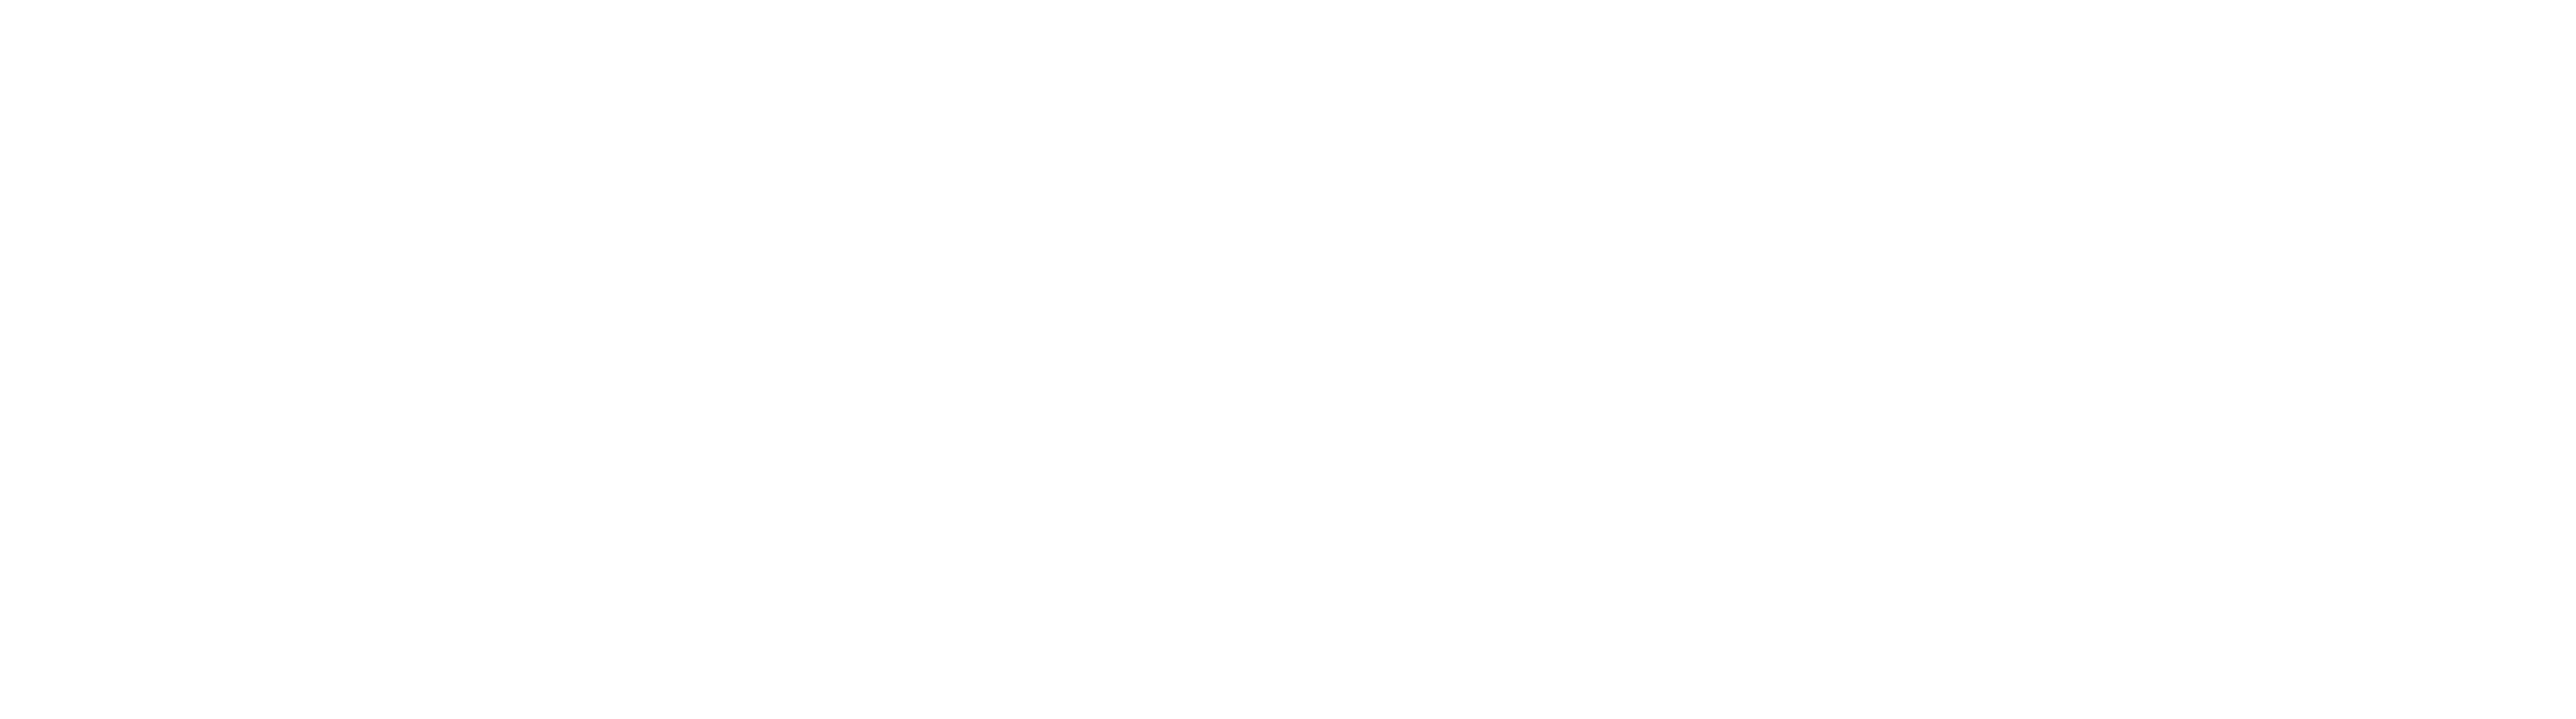 allergysa-logo-white